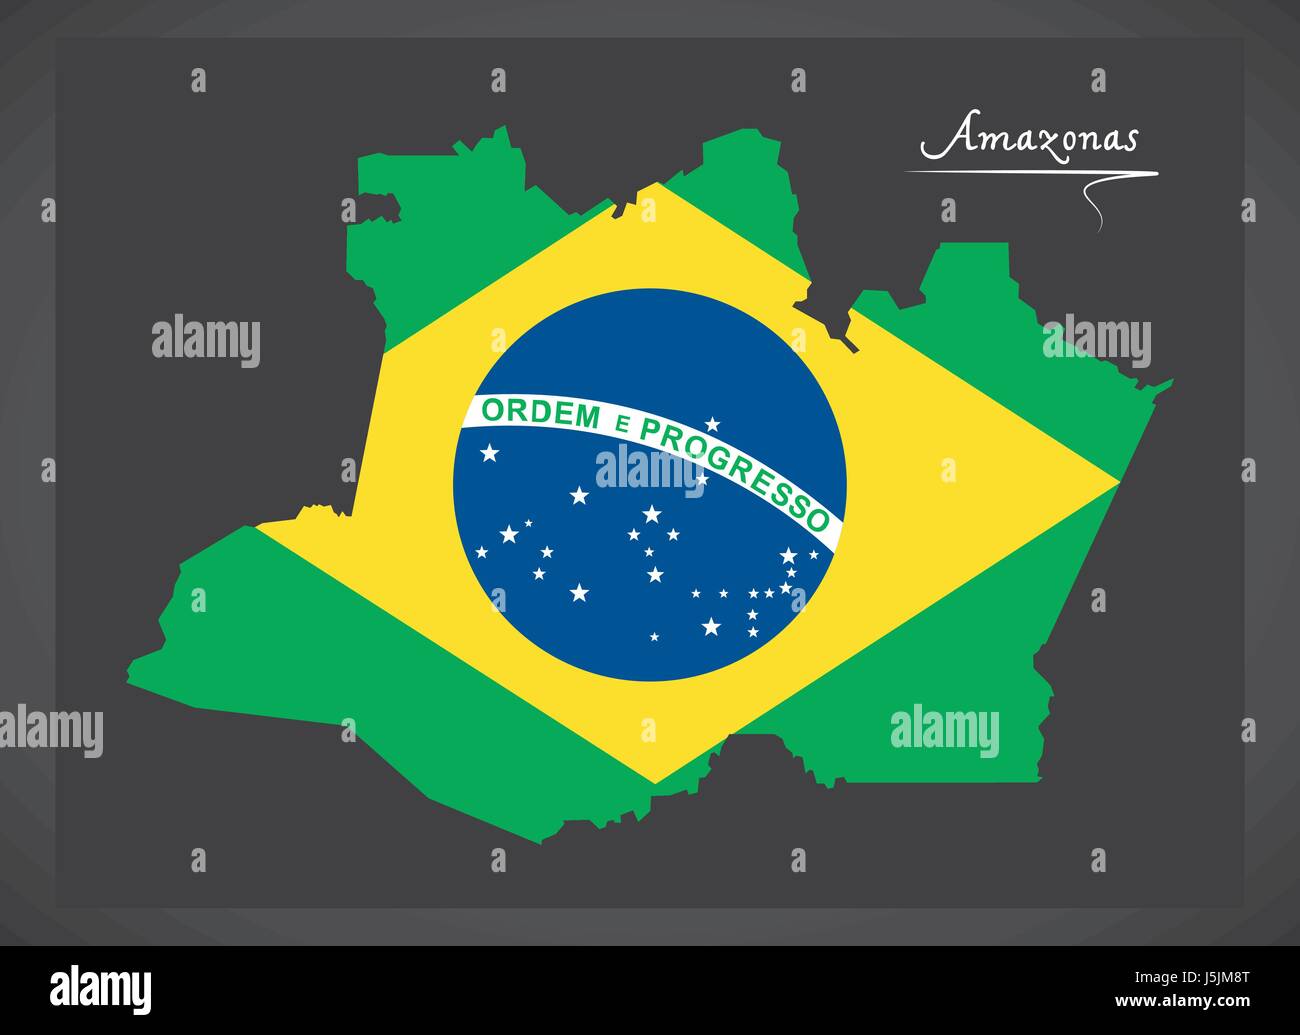 Amazonas map with Brazilian national flag illustration Stock Vector